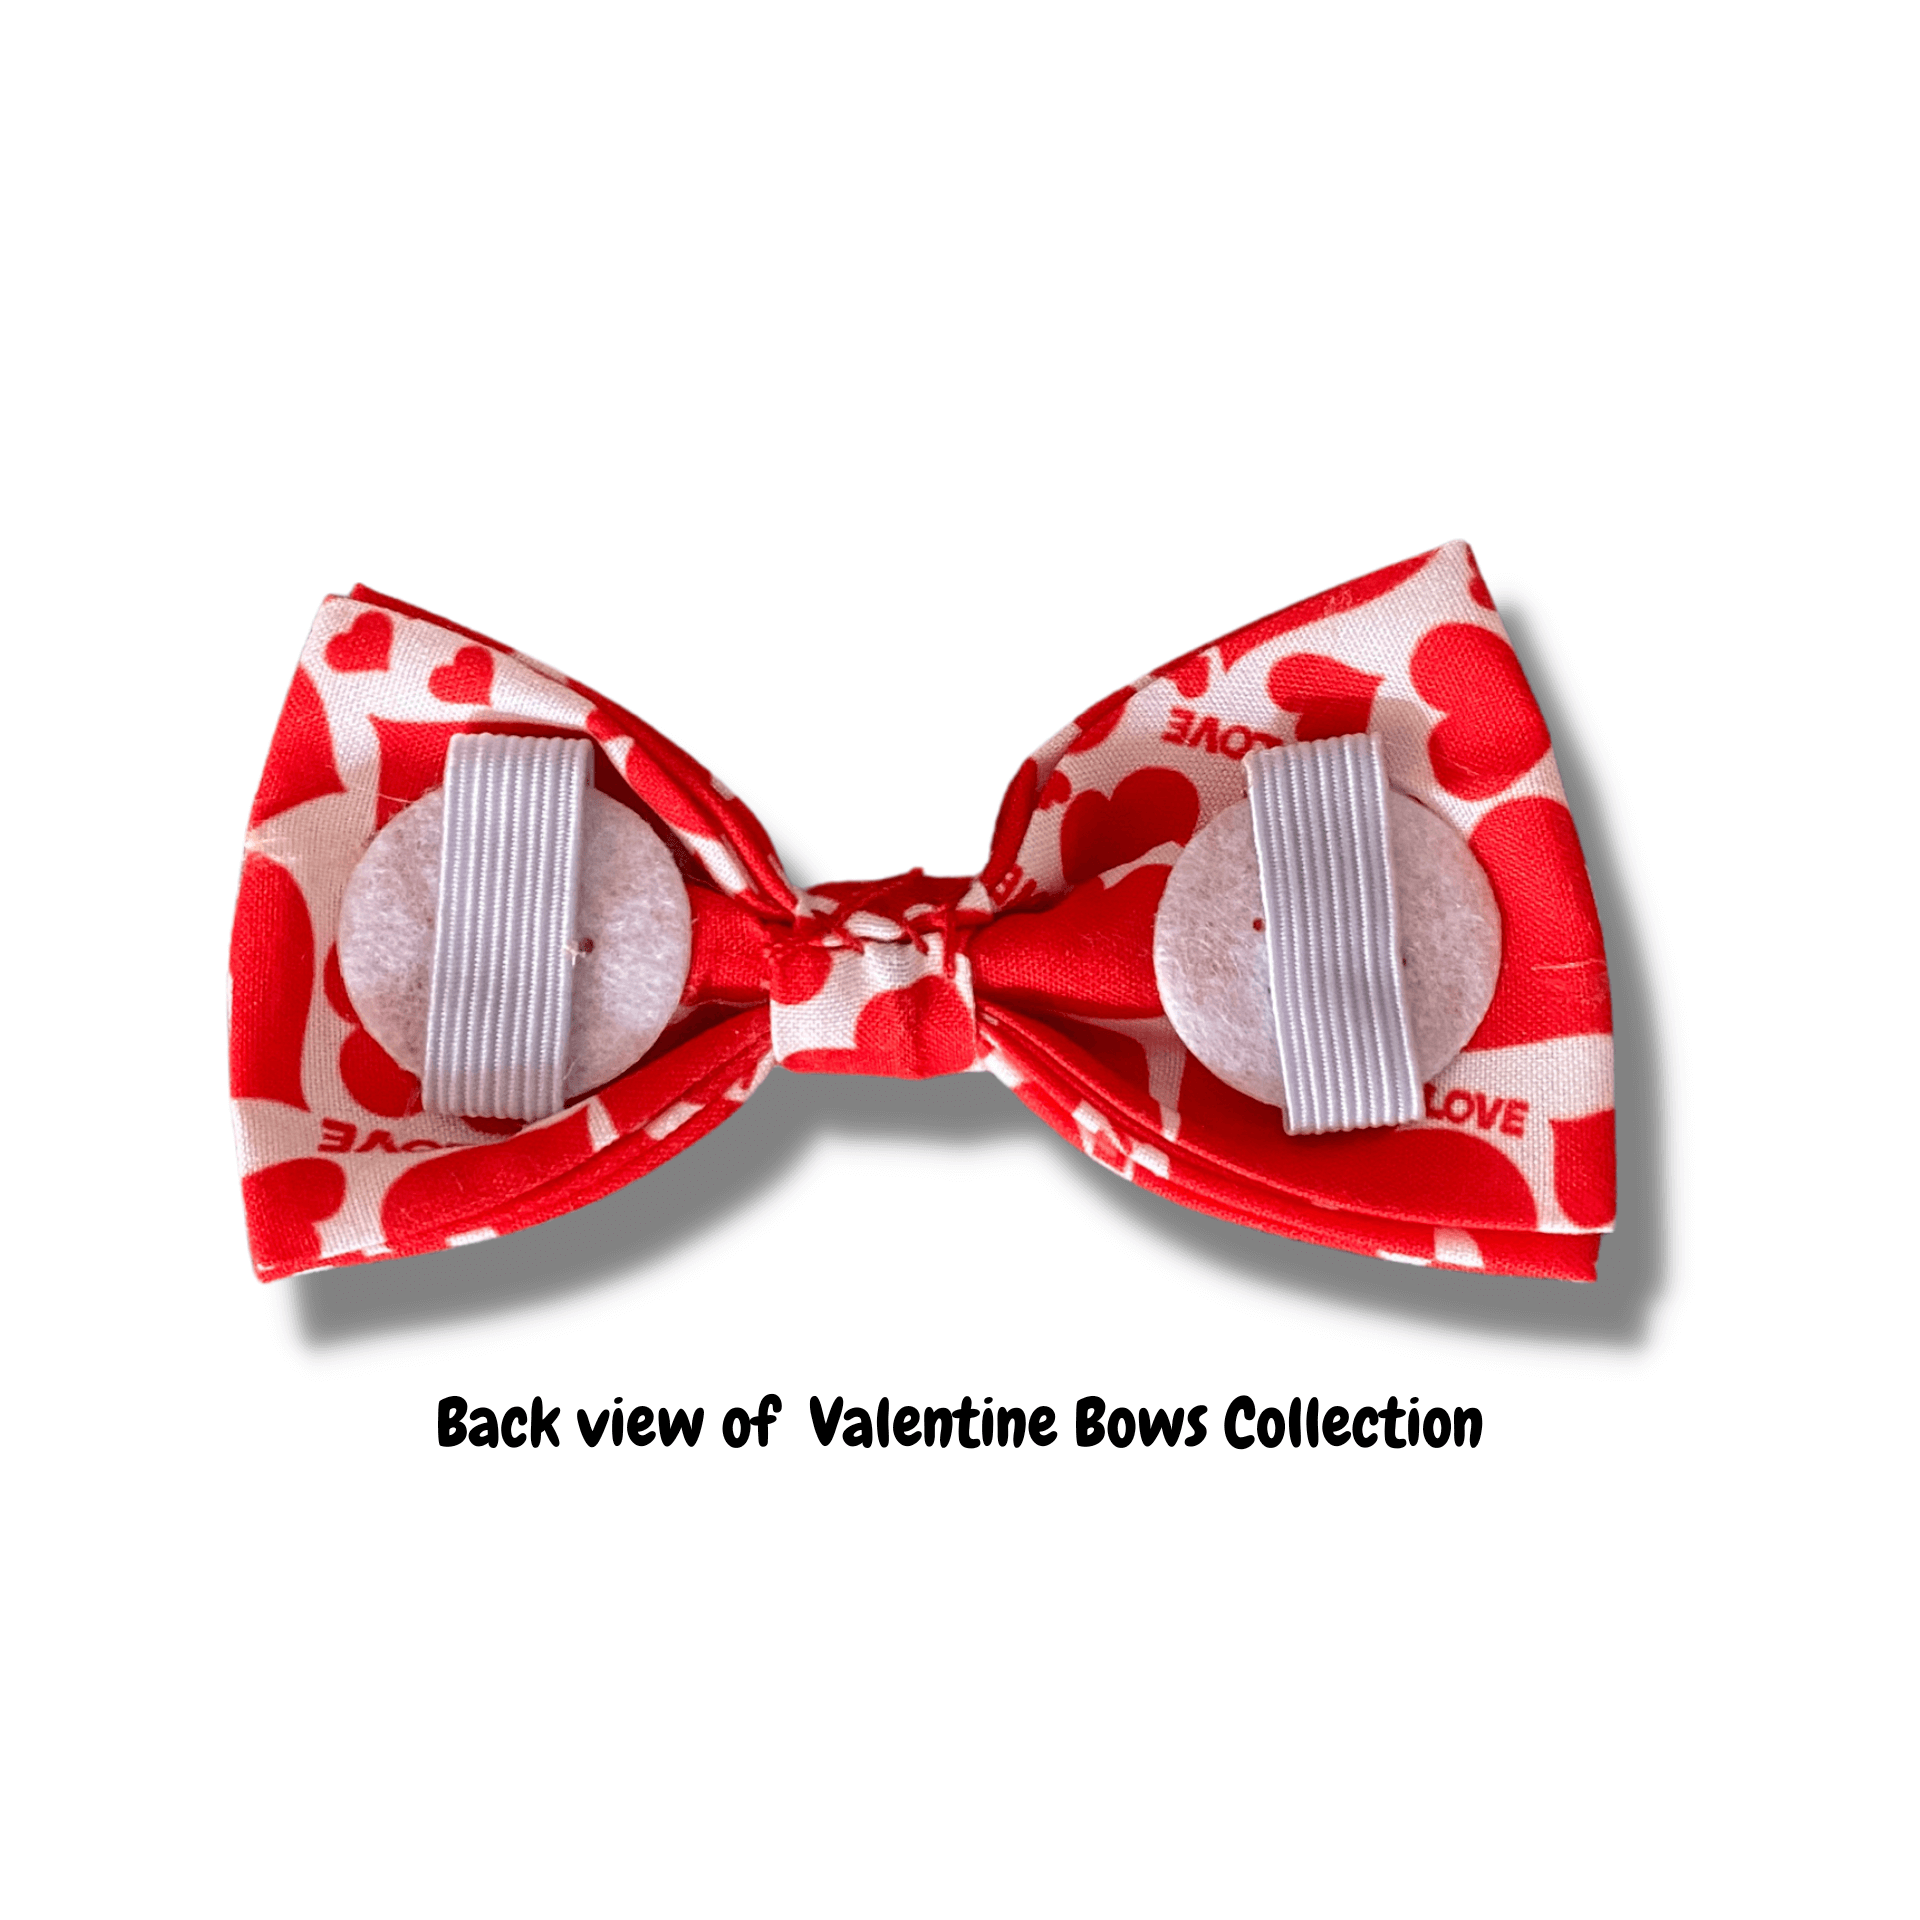 Valentine happy valentine dog bow fashion accessory, let's pawty 